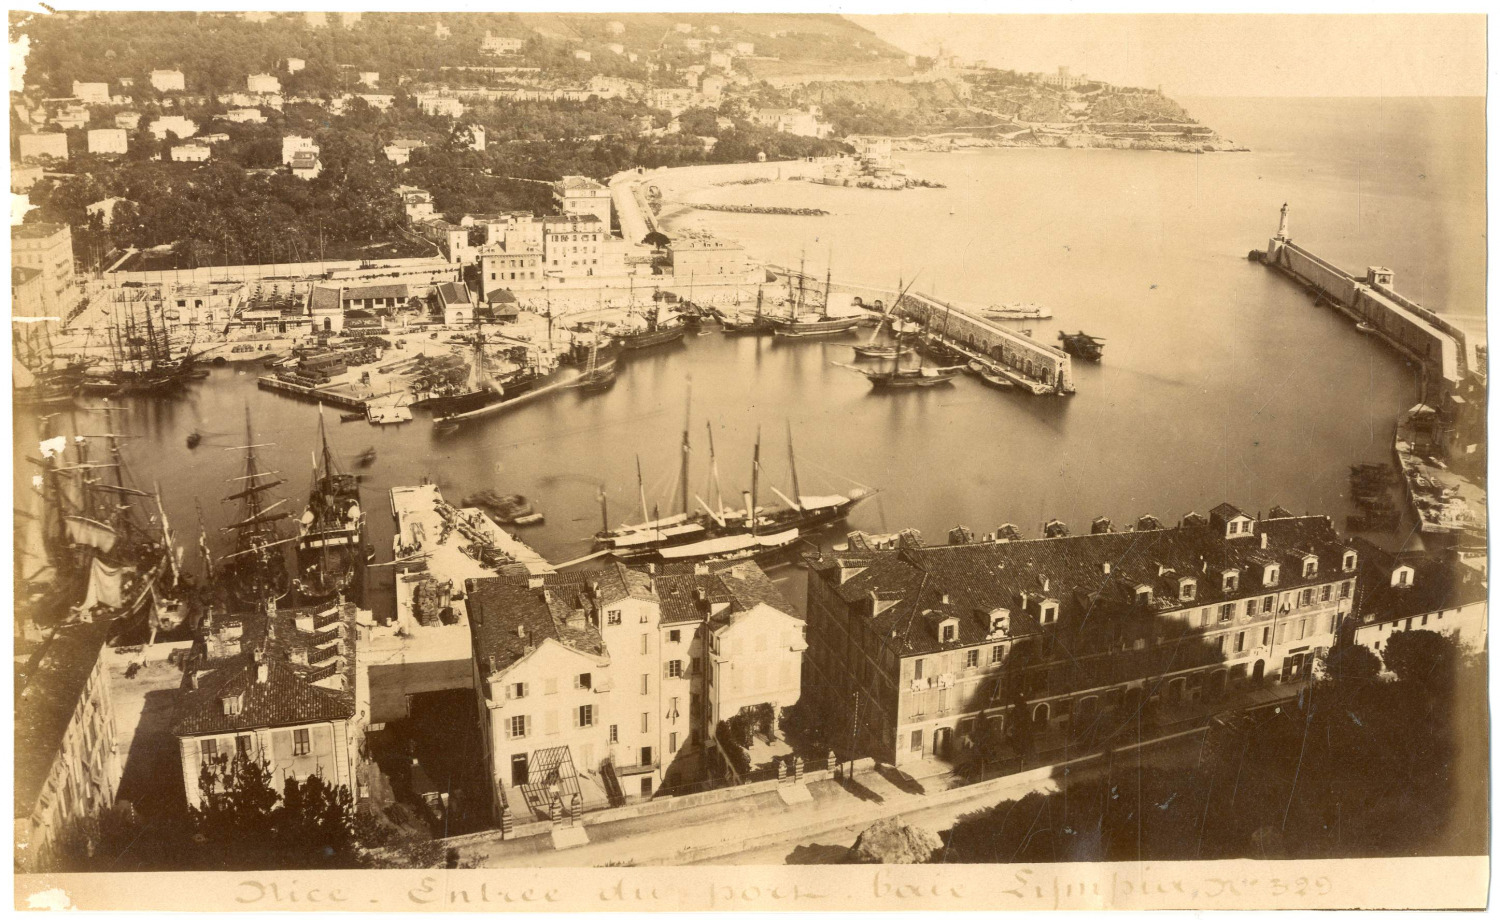 France, Nice, port entrance, Lympia Bay vintage albumen print, albu print print